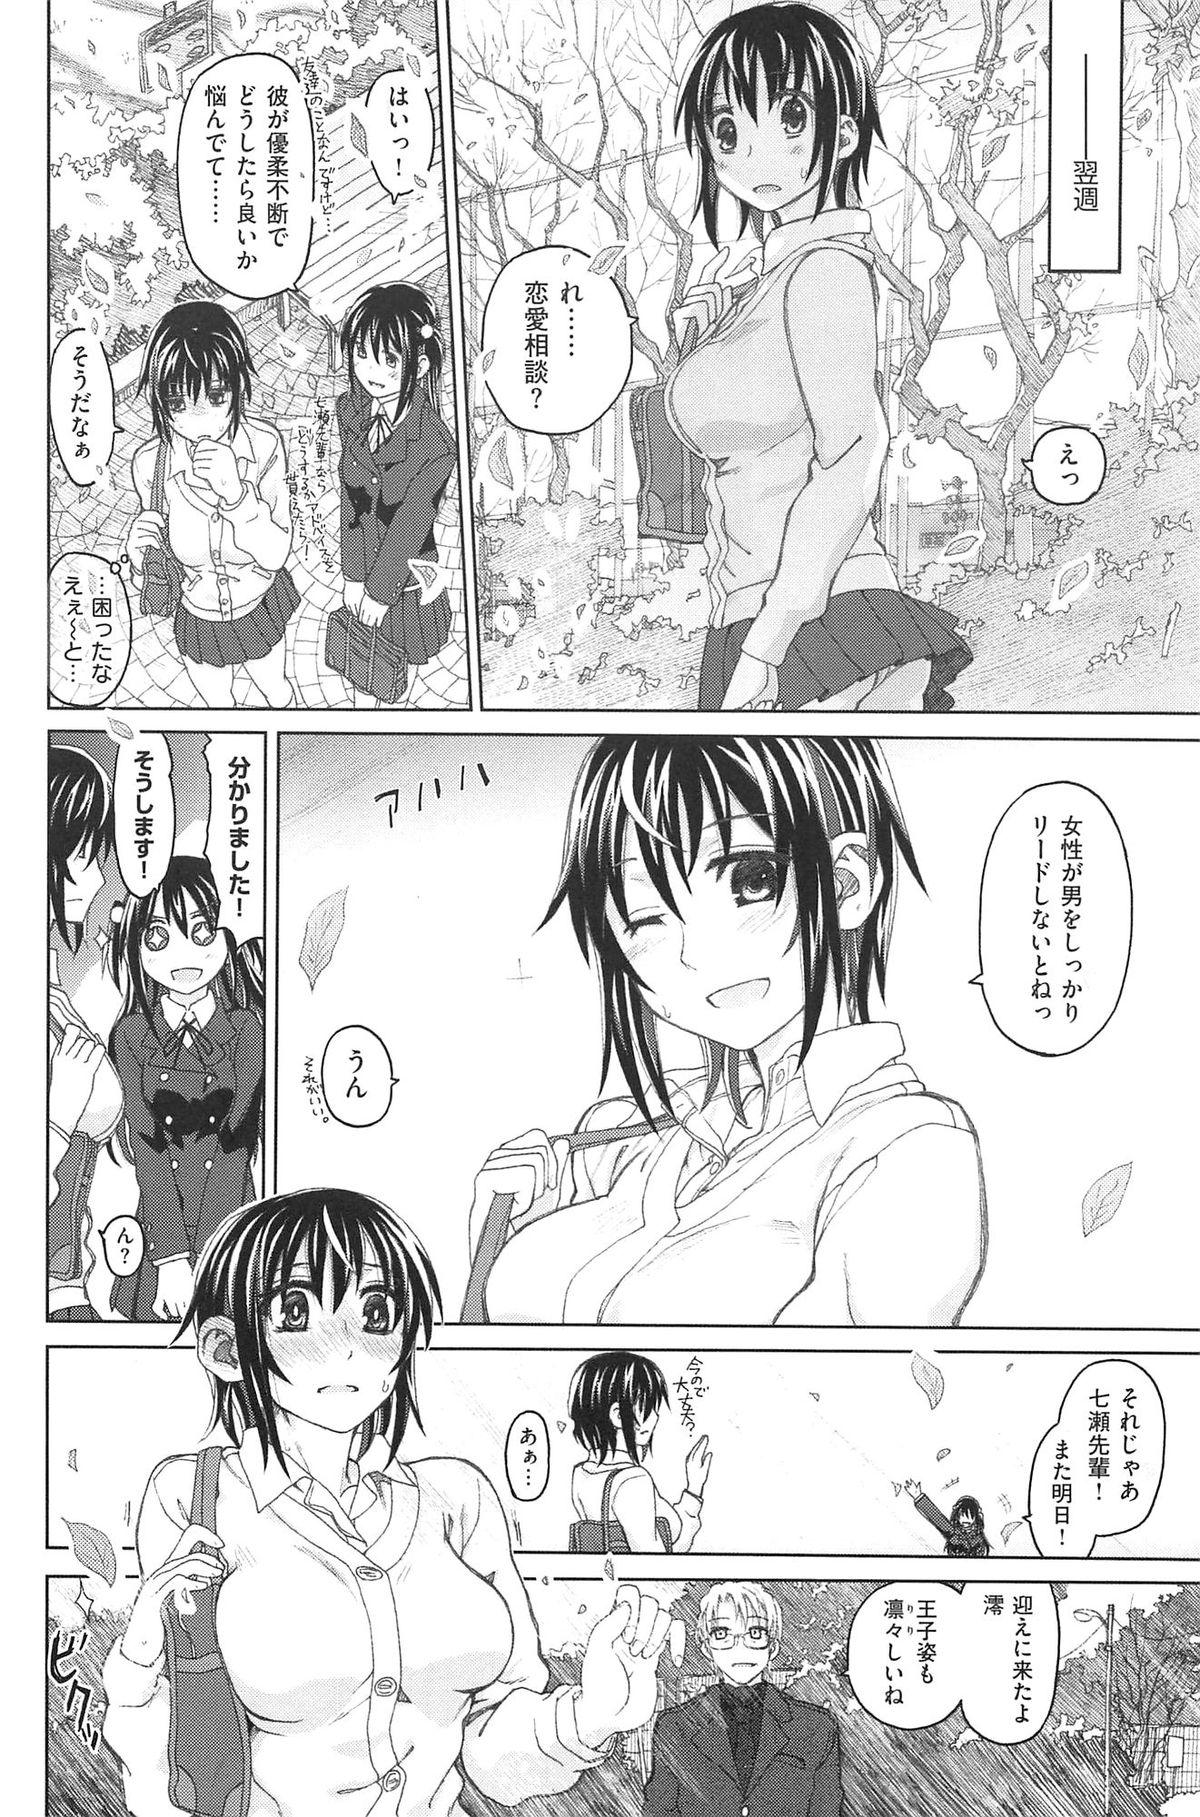 [Dagashi] Junketsu no Owaru Hibi (Beautiful Days of Losing Virginity) … (WANI MAGAZINE COMICS SPECIAL) 144